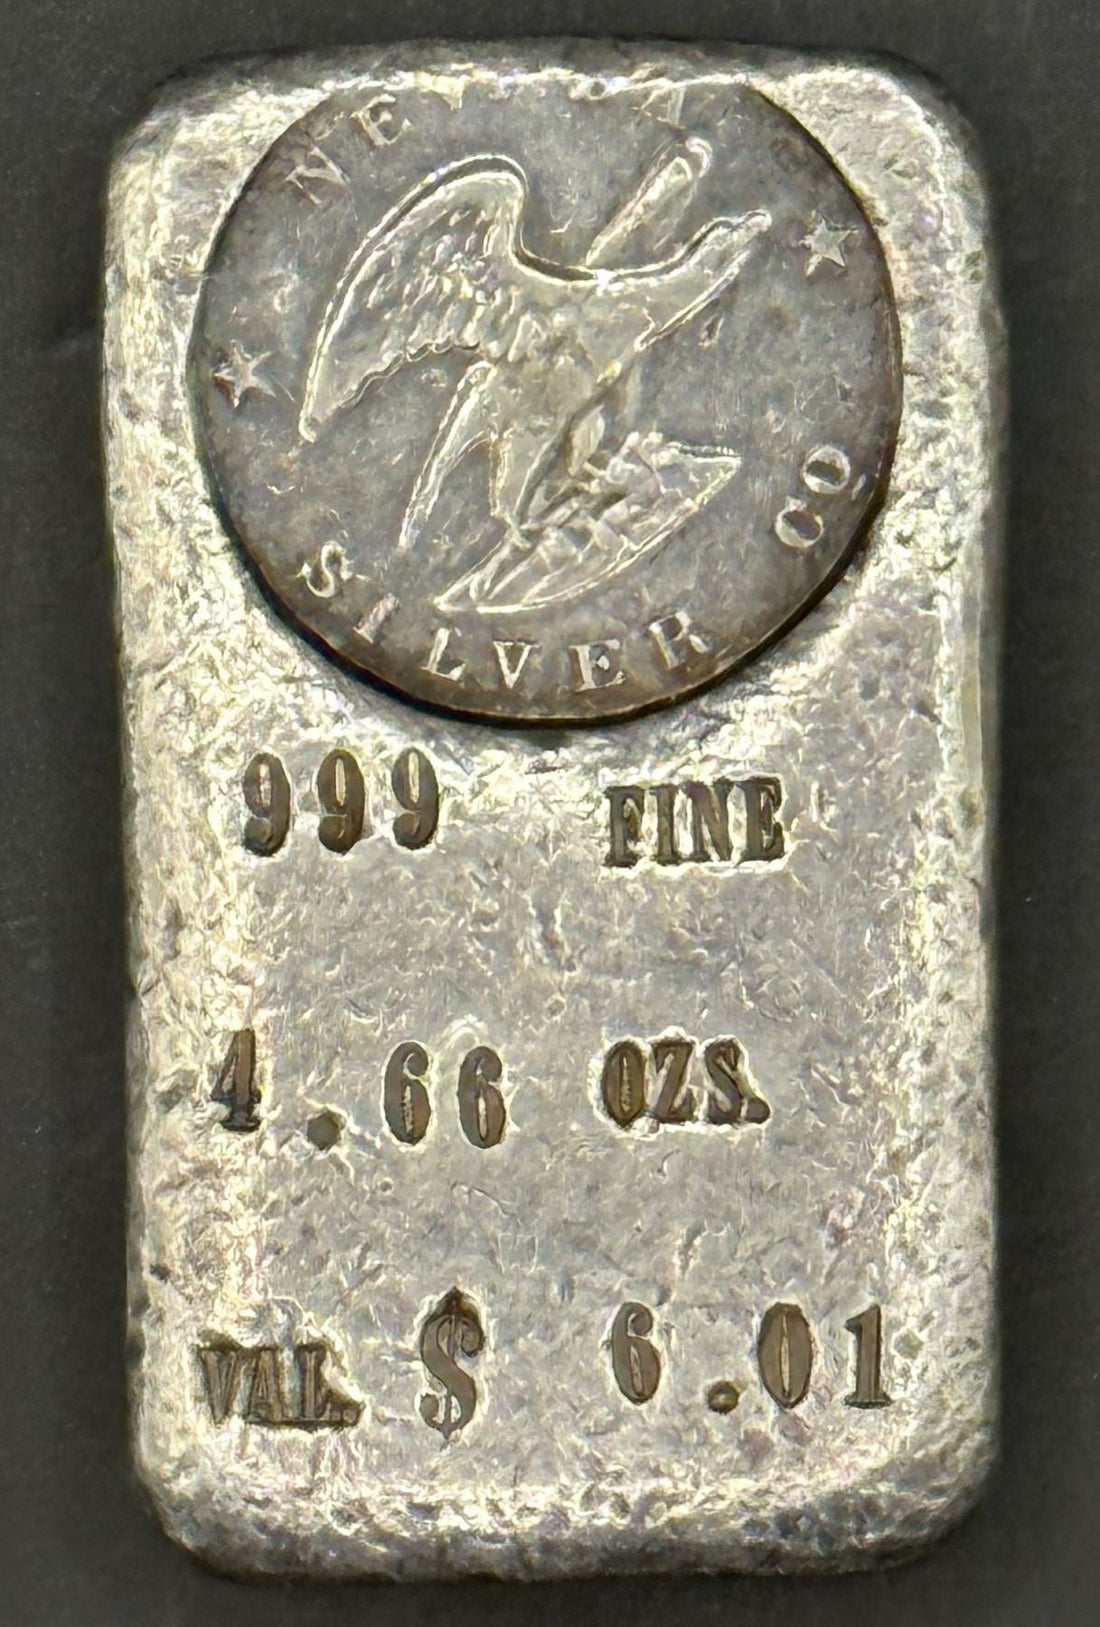 4.66 oz Nevada Silver Co (1950’s)